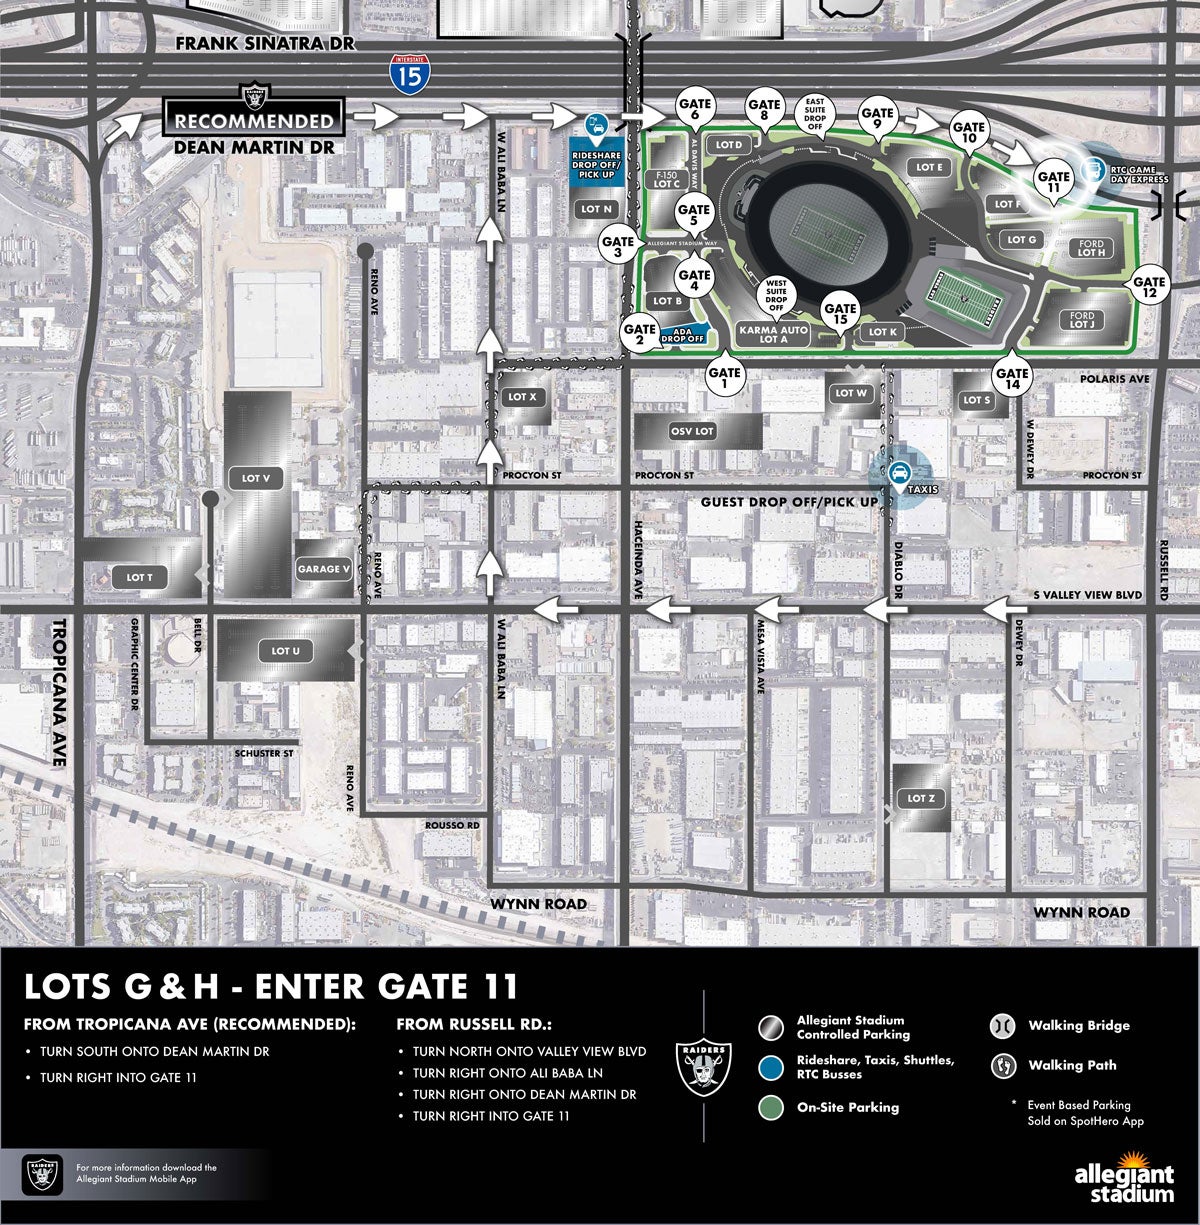 Lots G & H Parking Map - Enter Gate 11